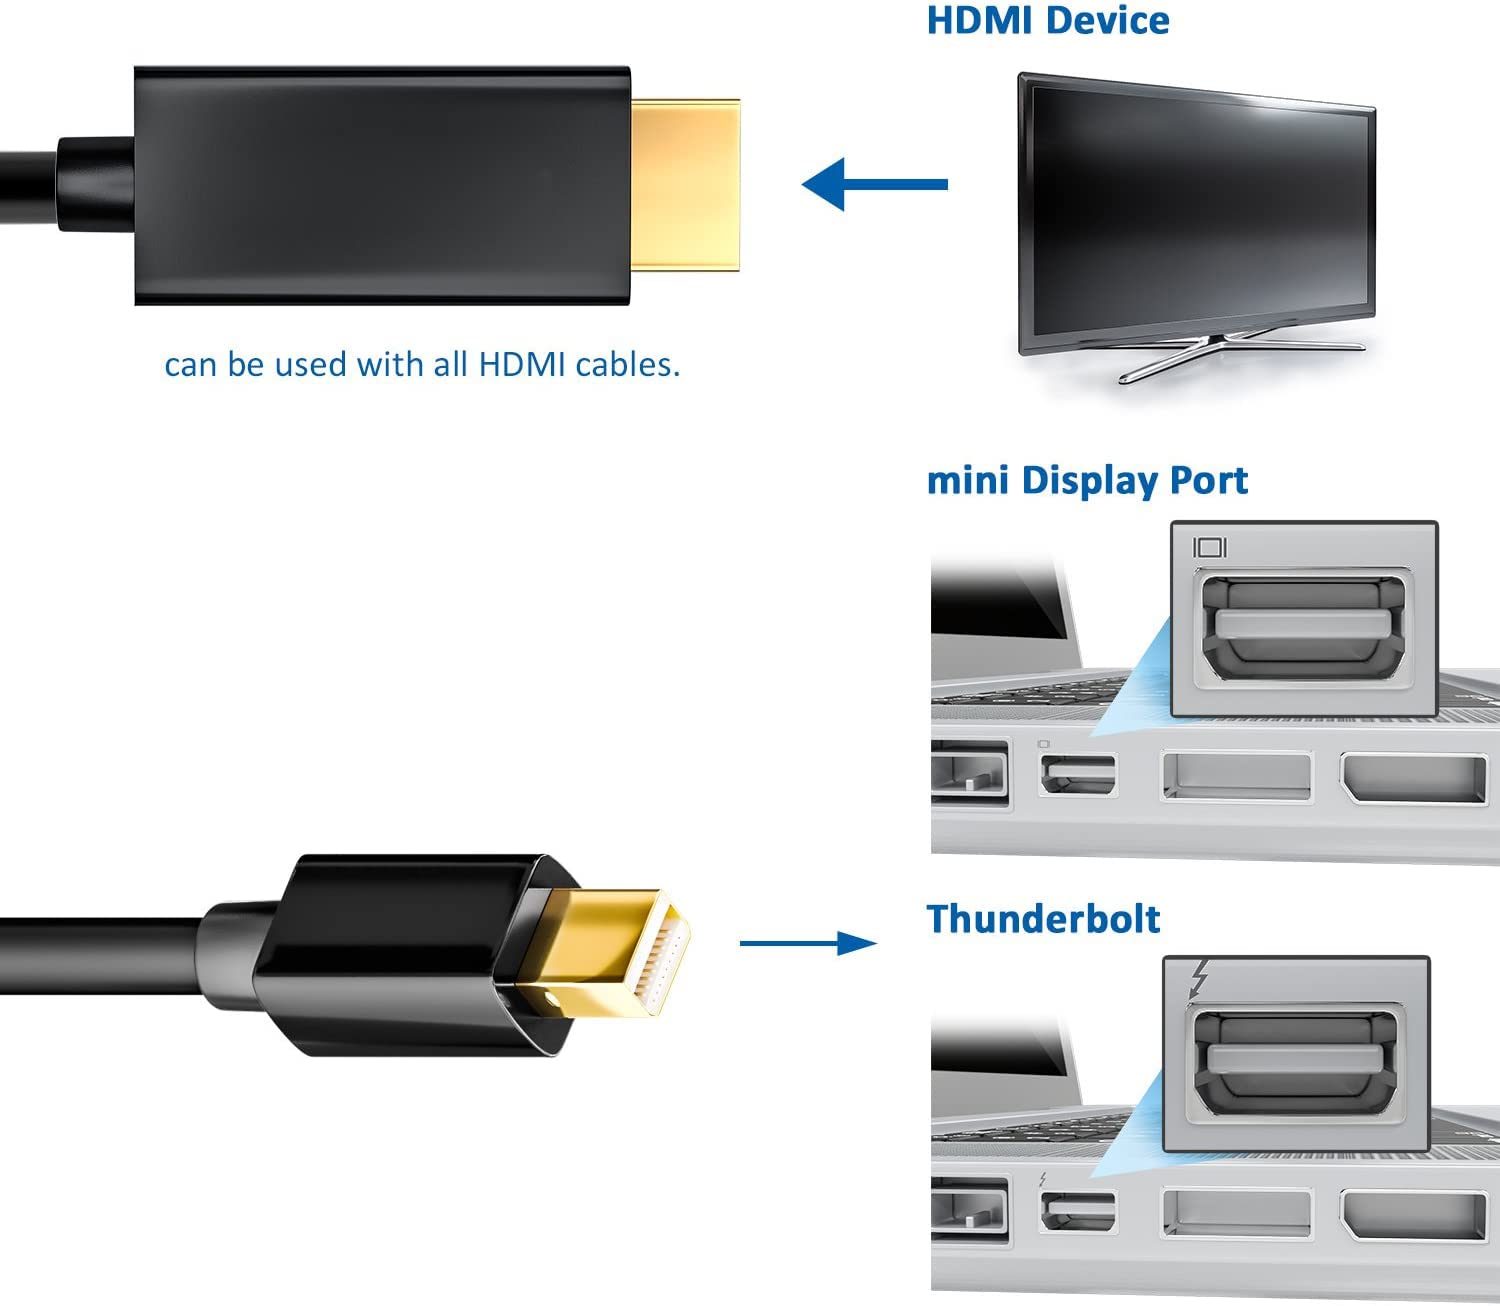 mDP2HD430-18-I | 1.8m Mini DisplayPort to HDMI Cable - 4K 30Hz Video